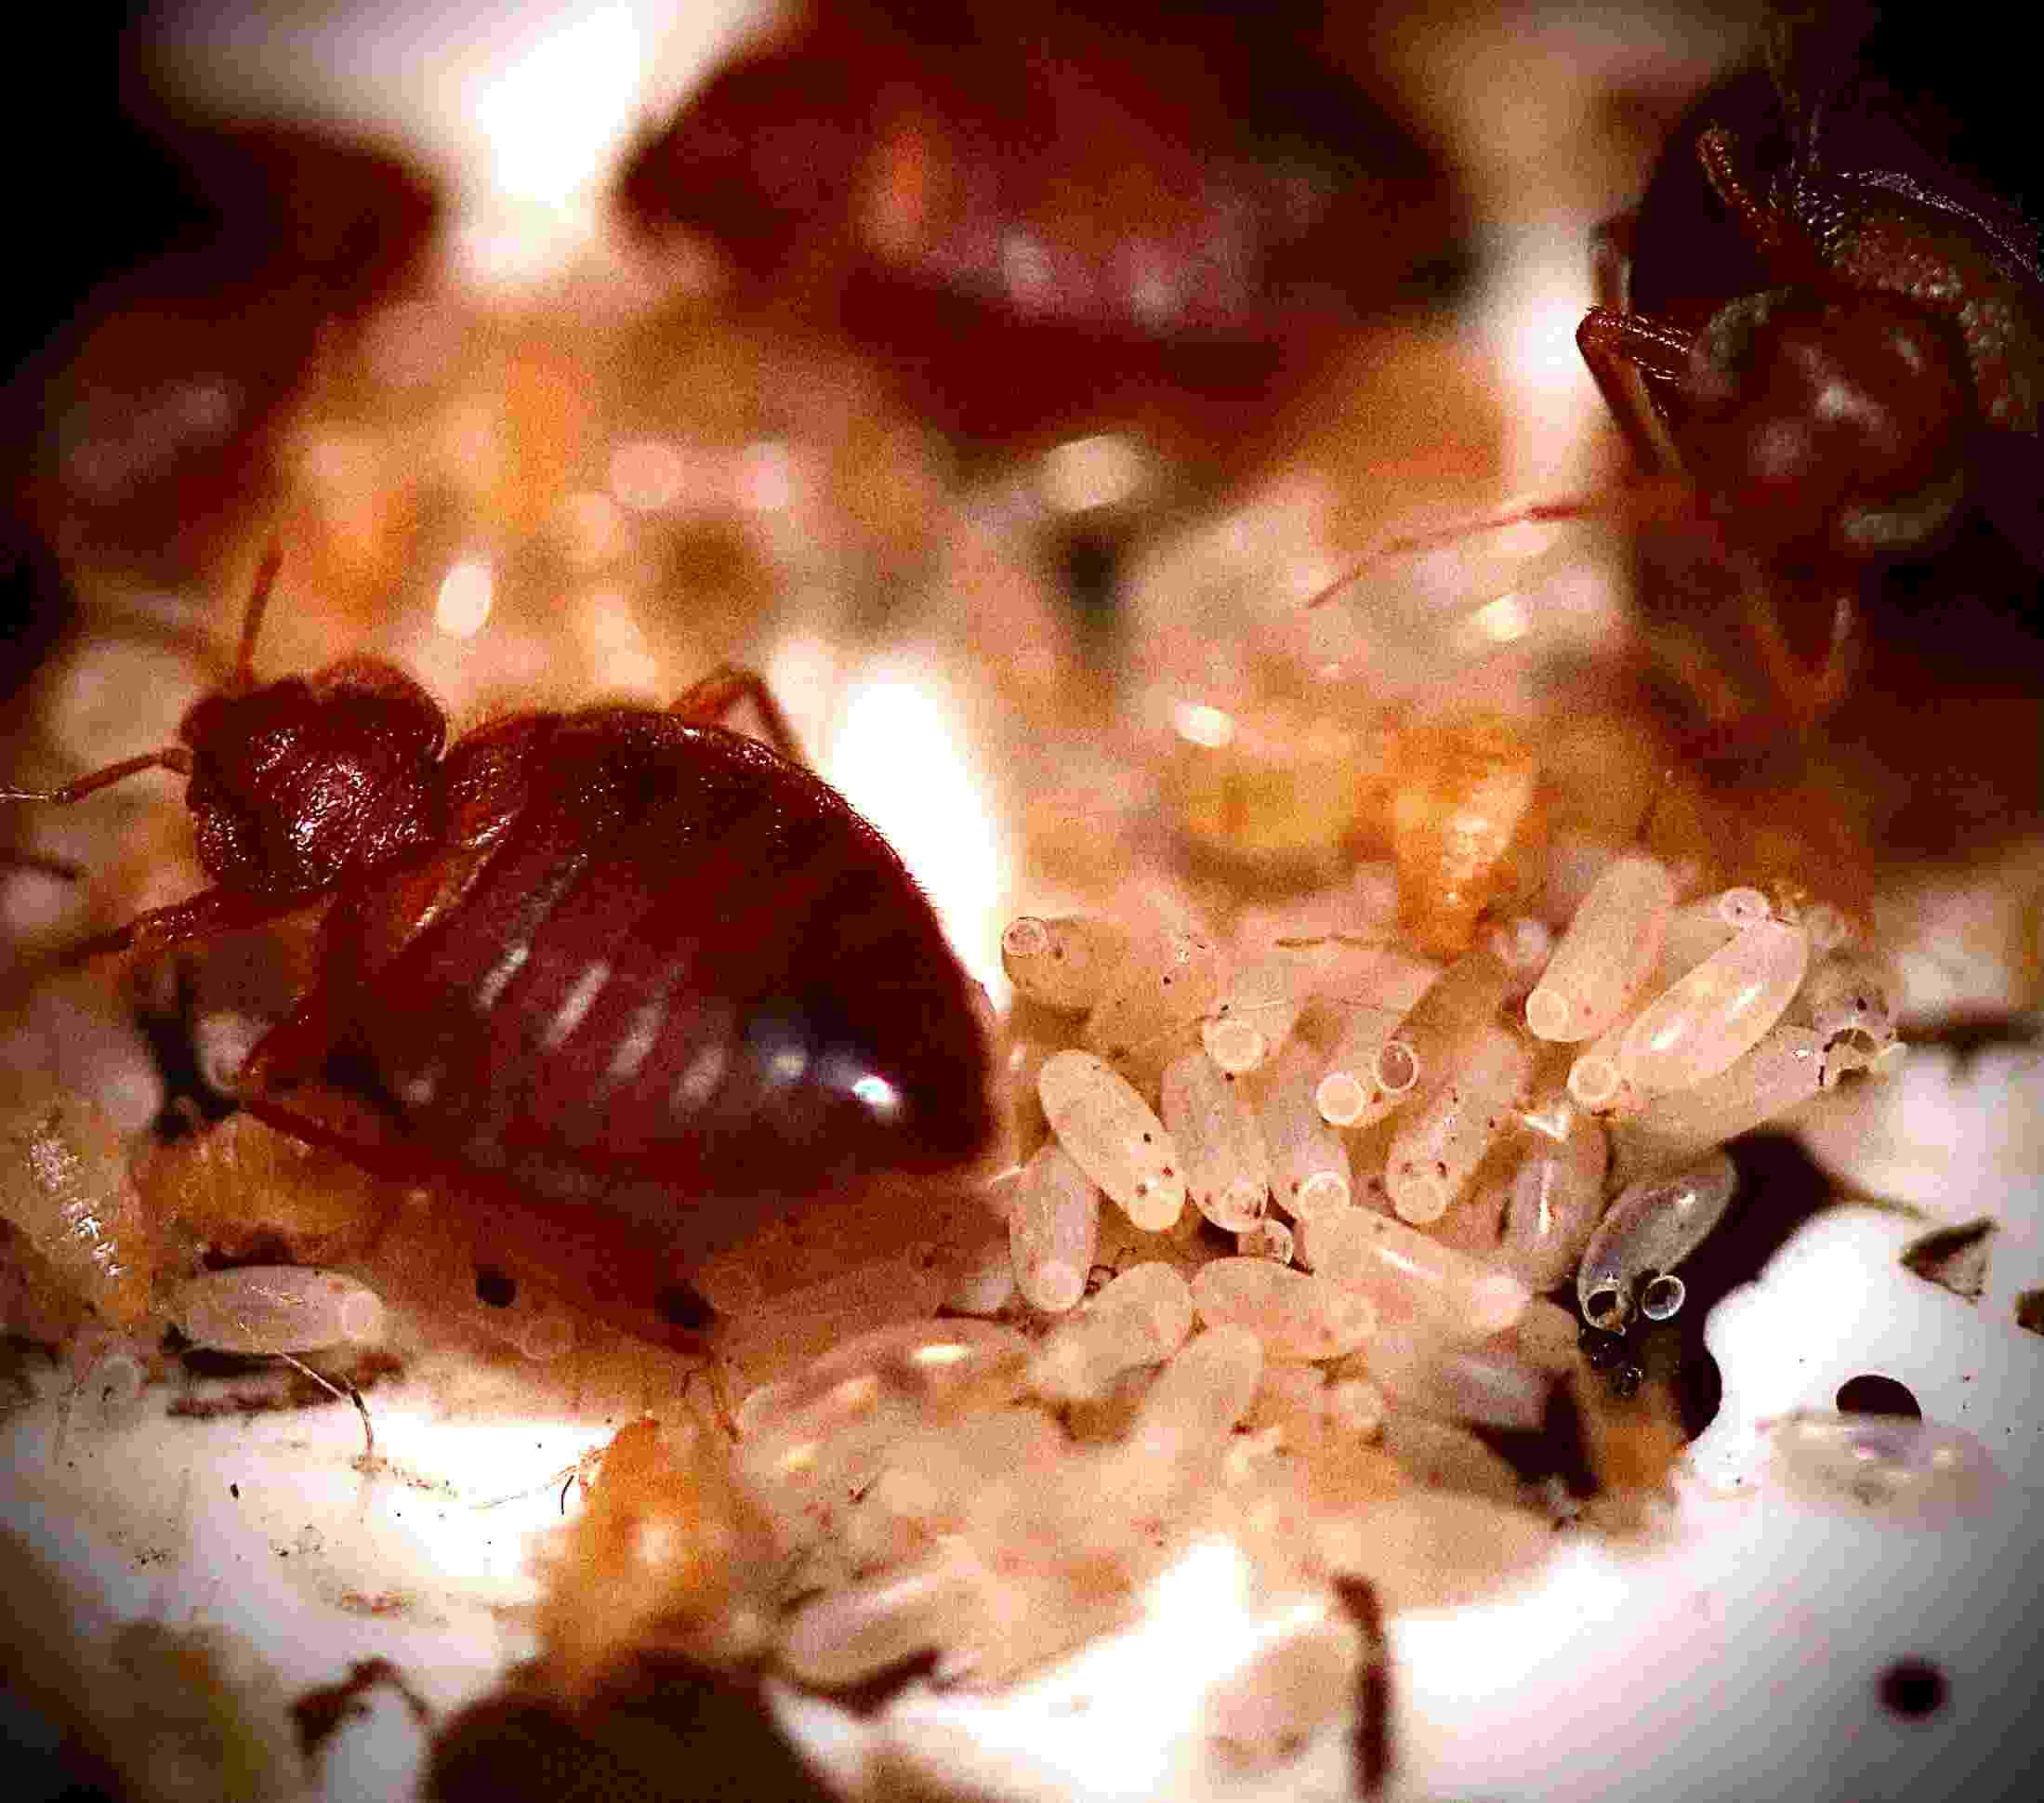 A close-up image of bedbugs crawling around a pile of bedbug eggs